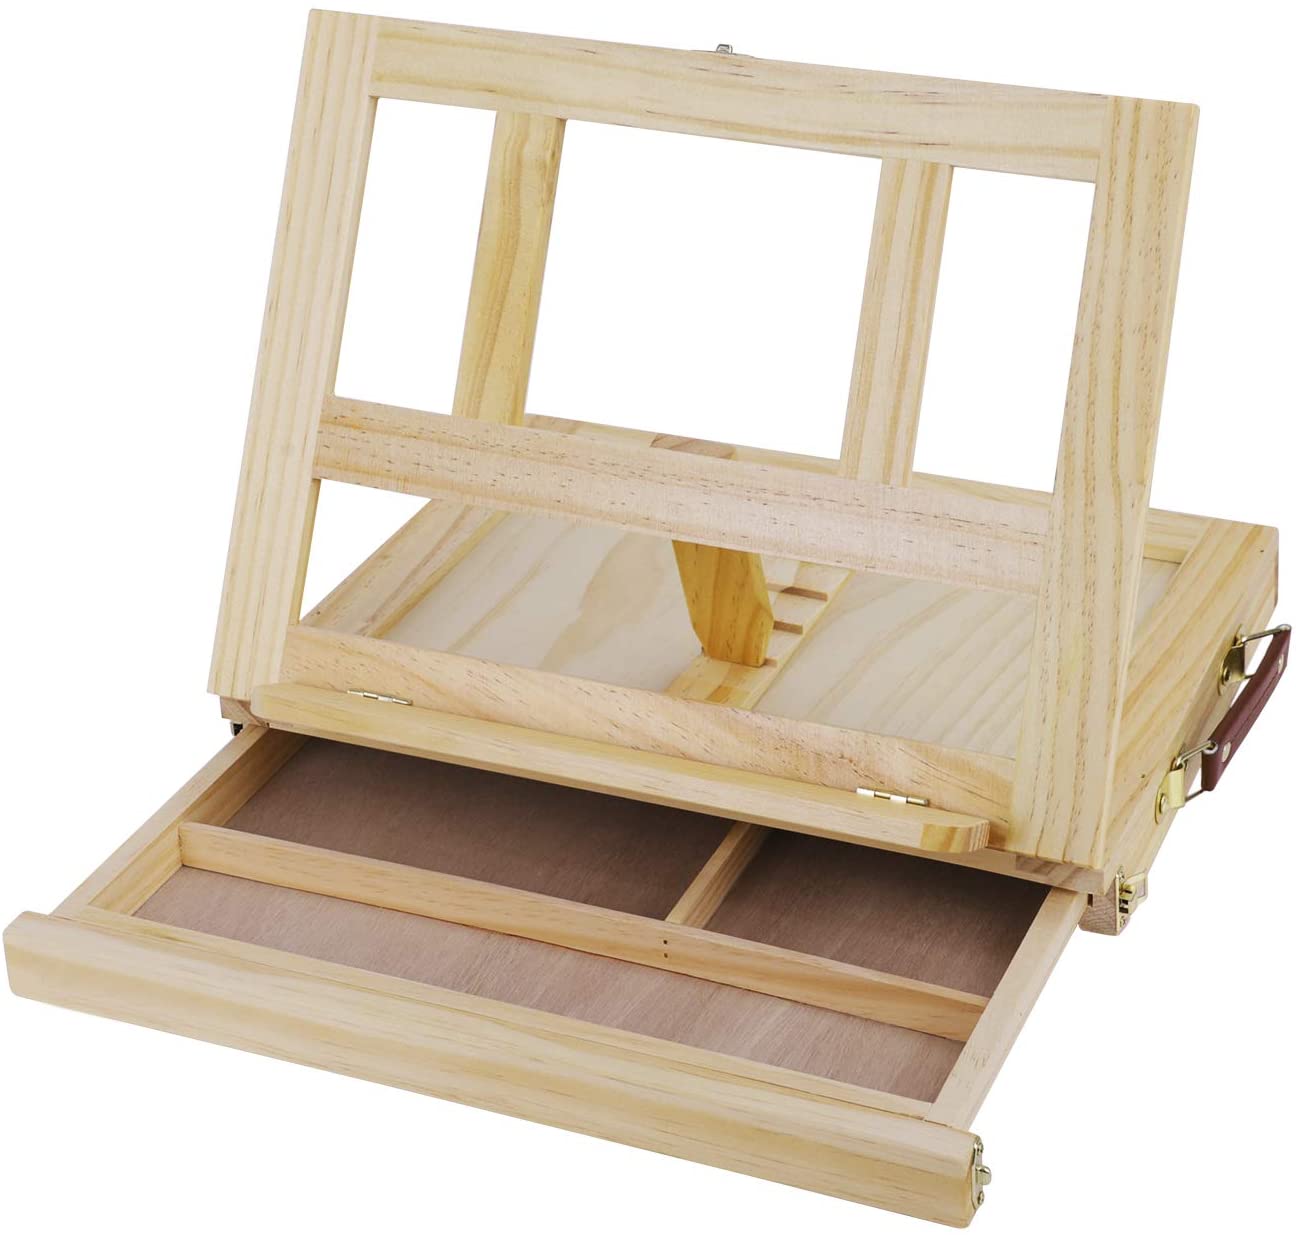  Arteza Caballete de mesa, 13.38 x 10.25 x 2 pulgadas, caja  portátil de caballete de madera de haya con cajón de 2 compartimentos y  paleta de madera, almacenamiento de suministros de